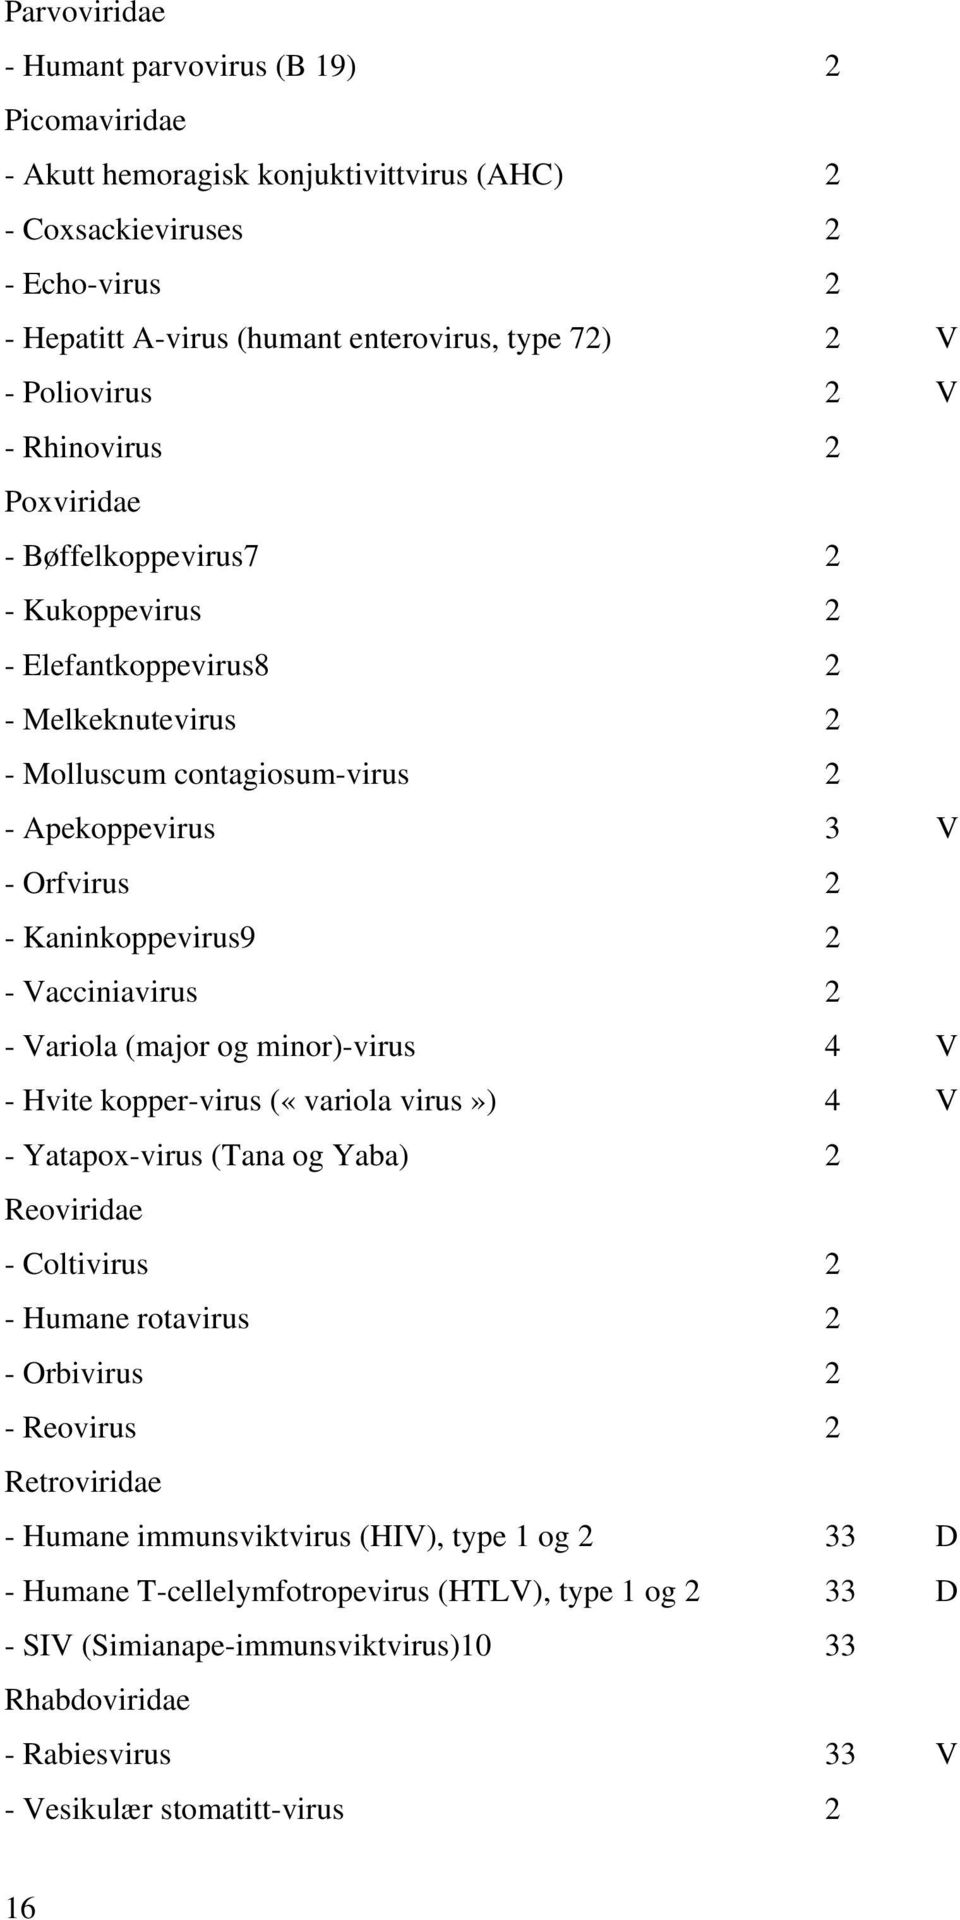 Kaninkoppevirus9 2 - Vacciniavirus 2 - Variola (major og minor)-virus 4 V - Hvite kopper-virus («variola virus») 4 V - Yatapox-virus (Tana og Yaba) 2 Reoviridae - Coltivirus 2 - Humane rotavirus 2 -